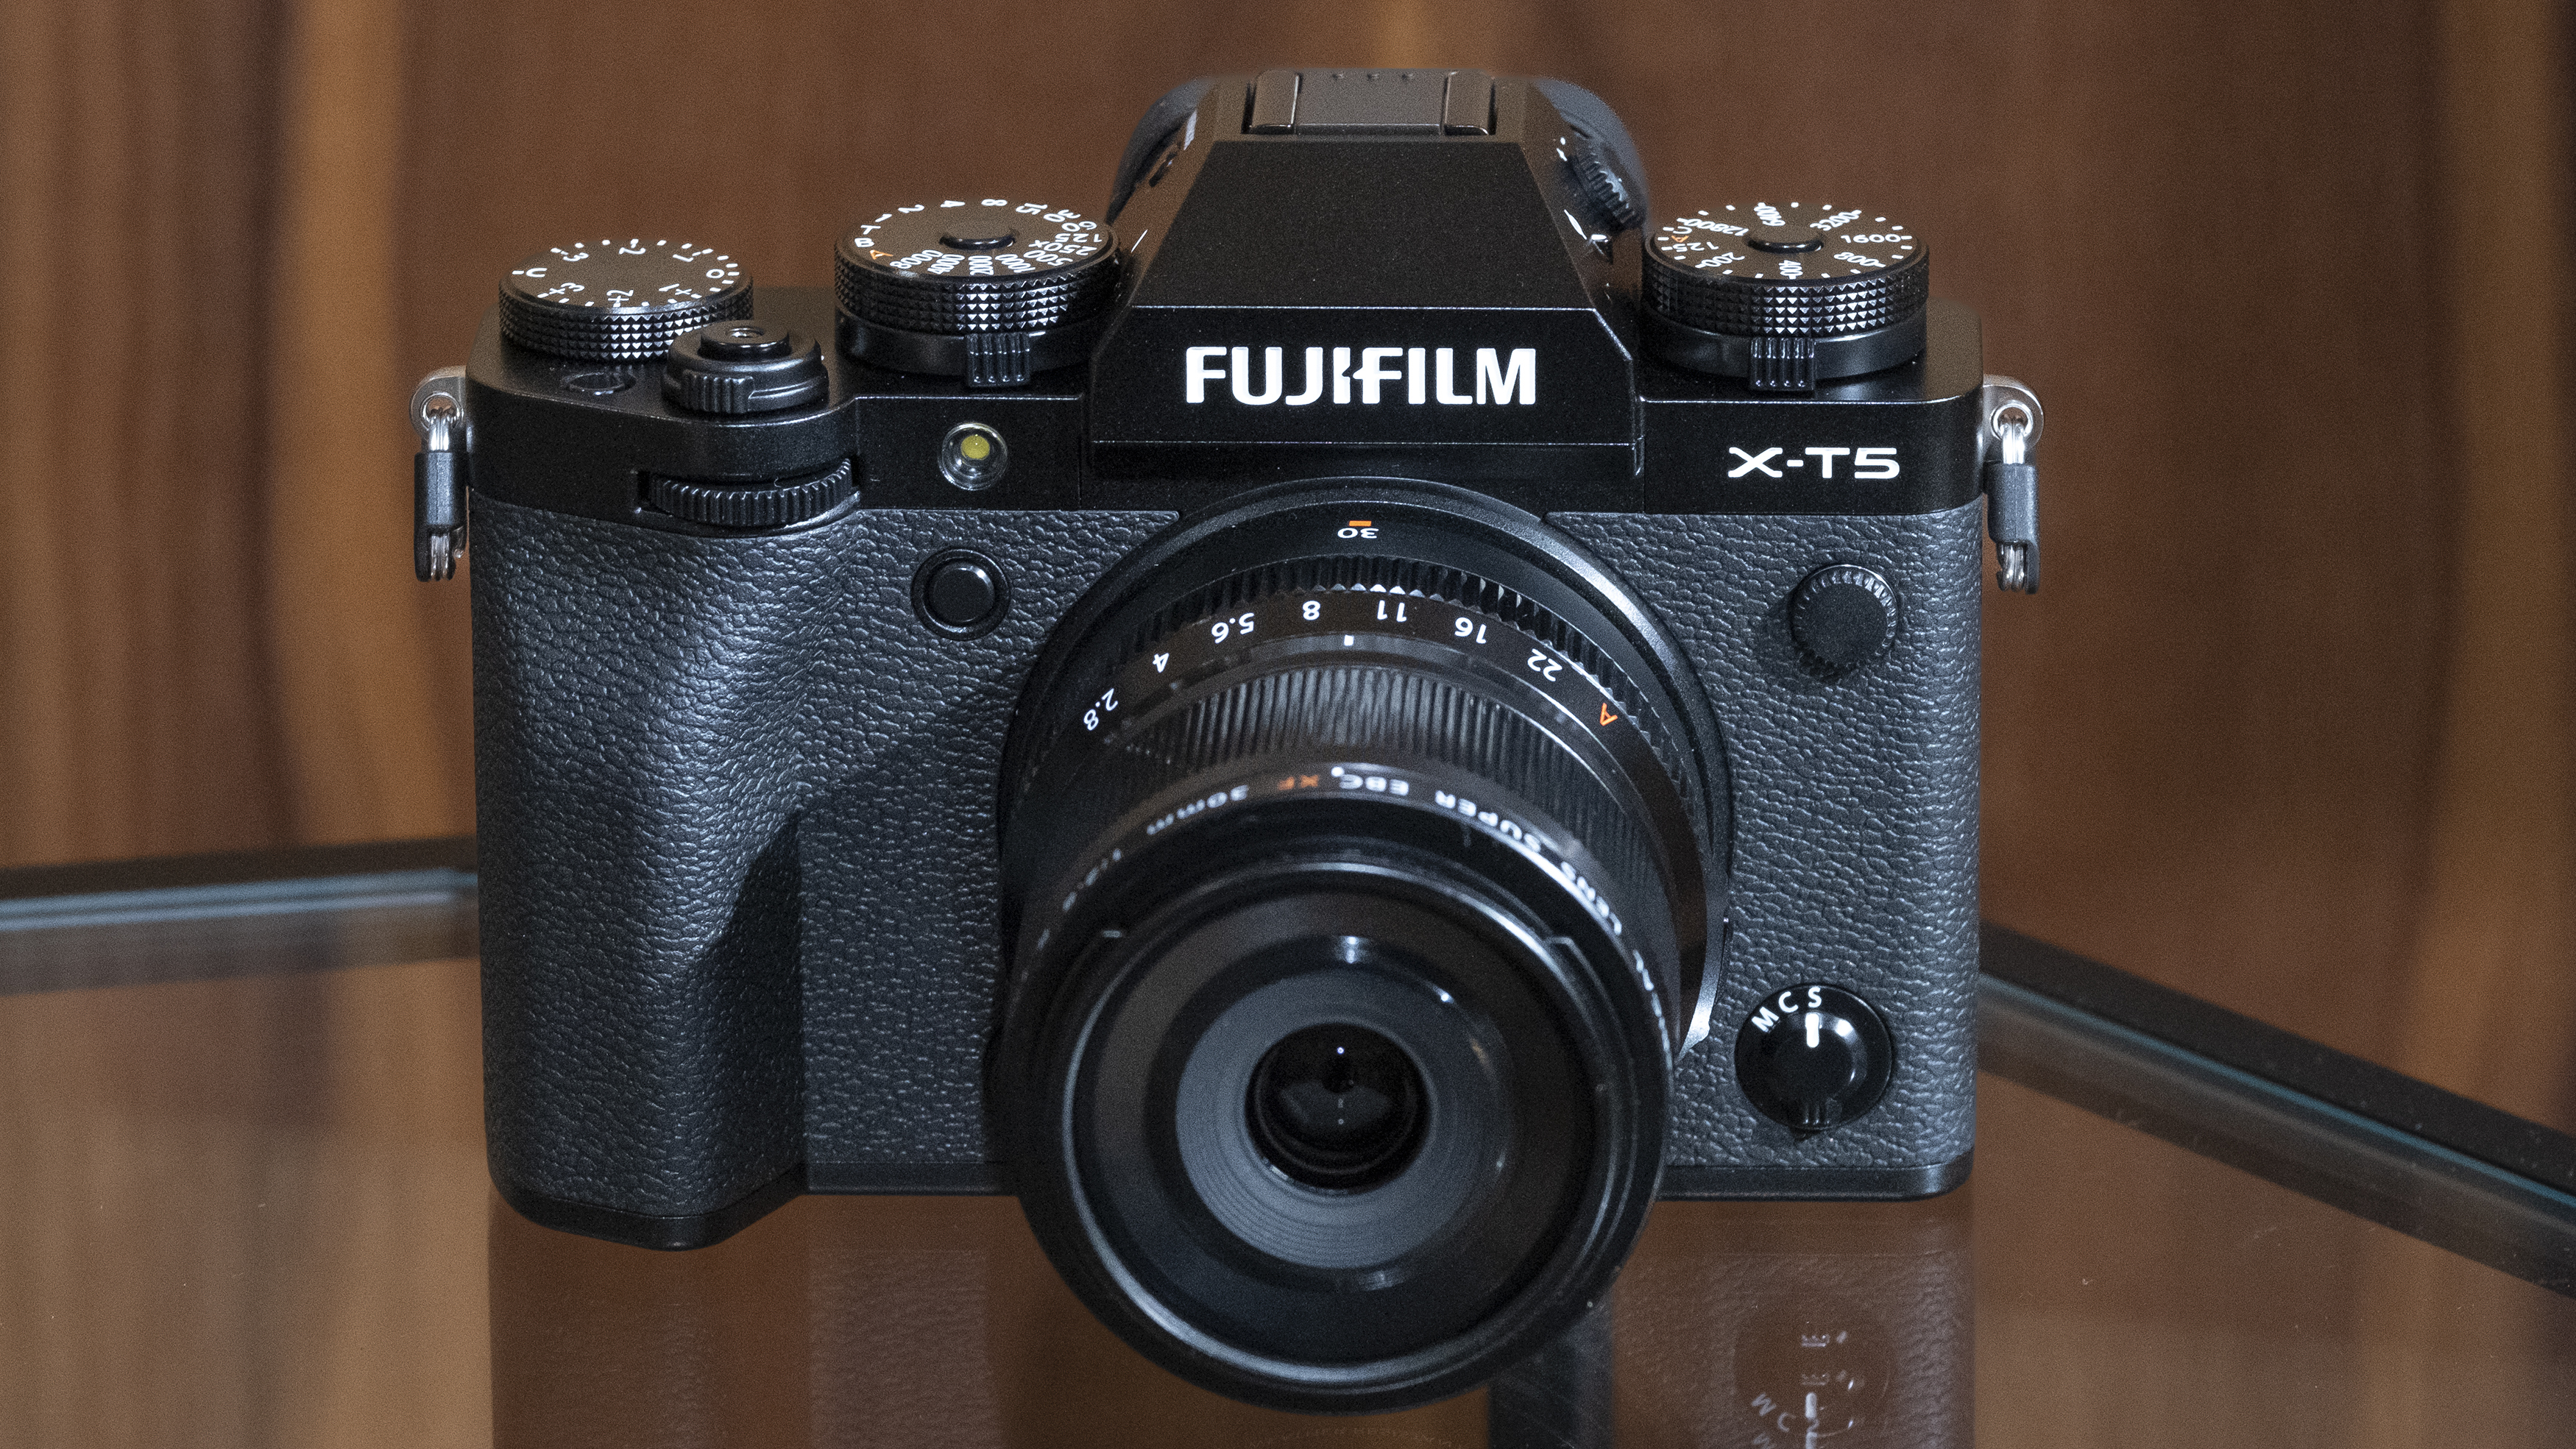 Absoluut Binnenwaarts Me Fujifilm X-T5 review: maximum photo fun | TechRadar